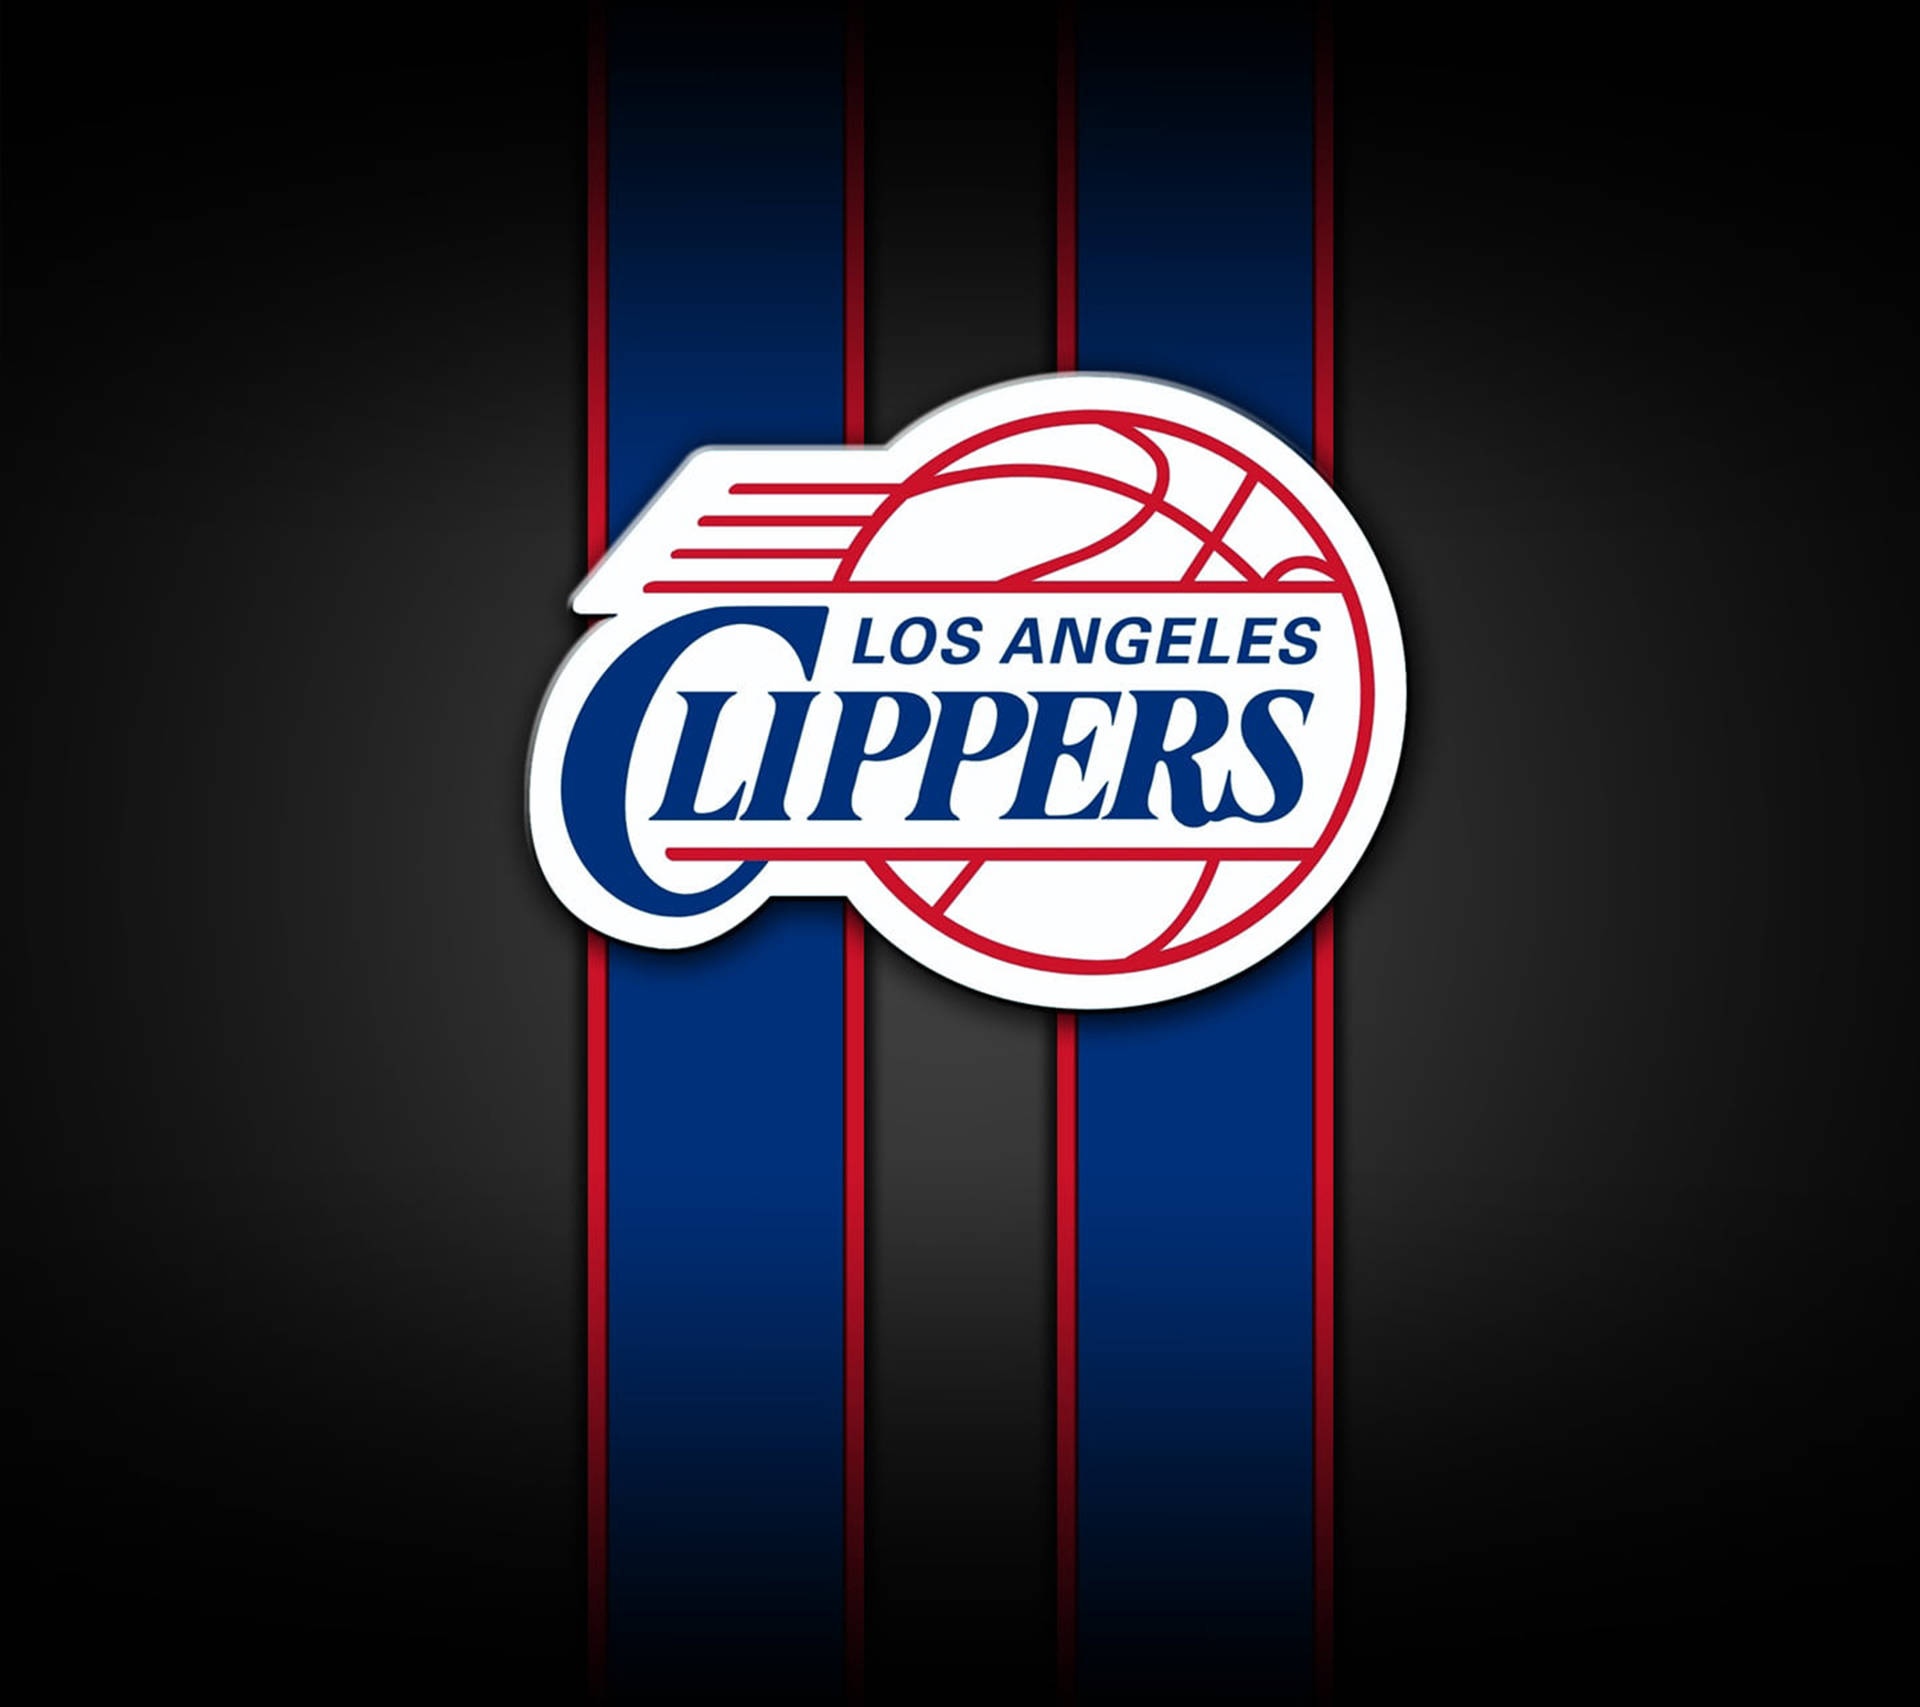 Los Angeles Clippers Strip Vignette Design Background